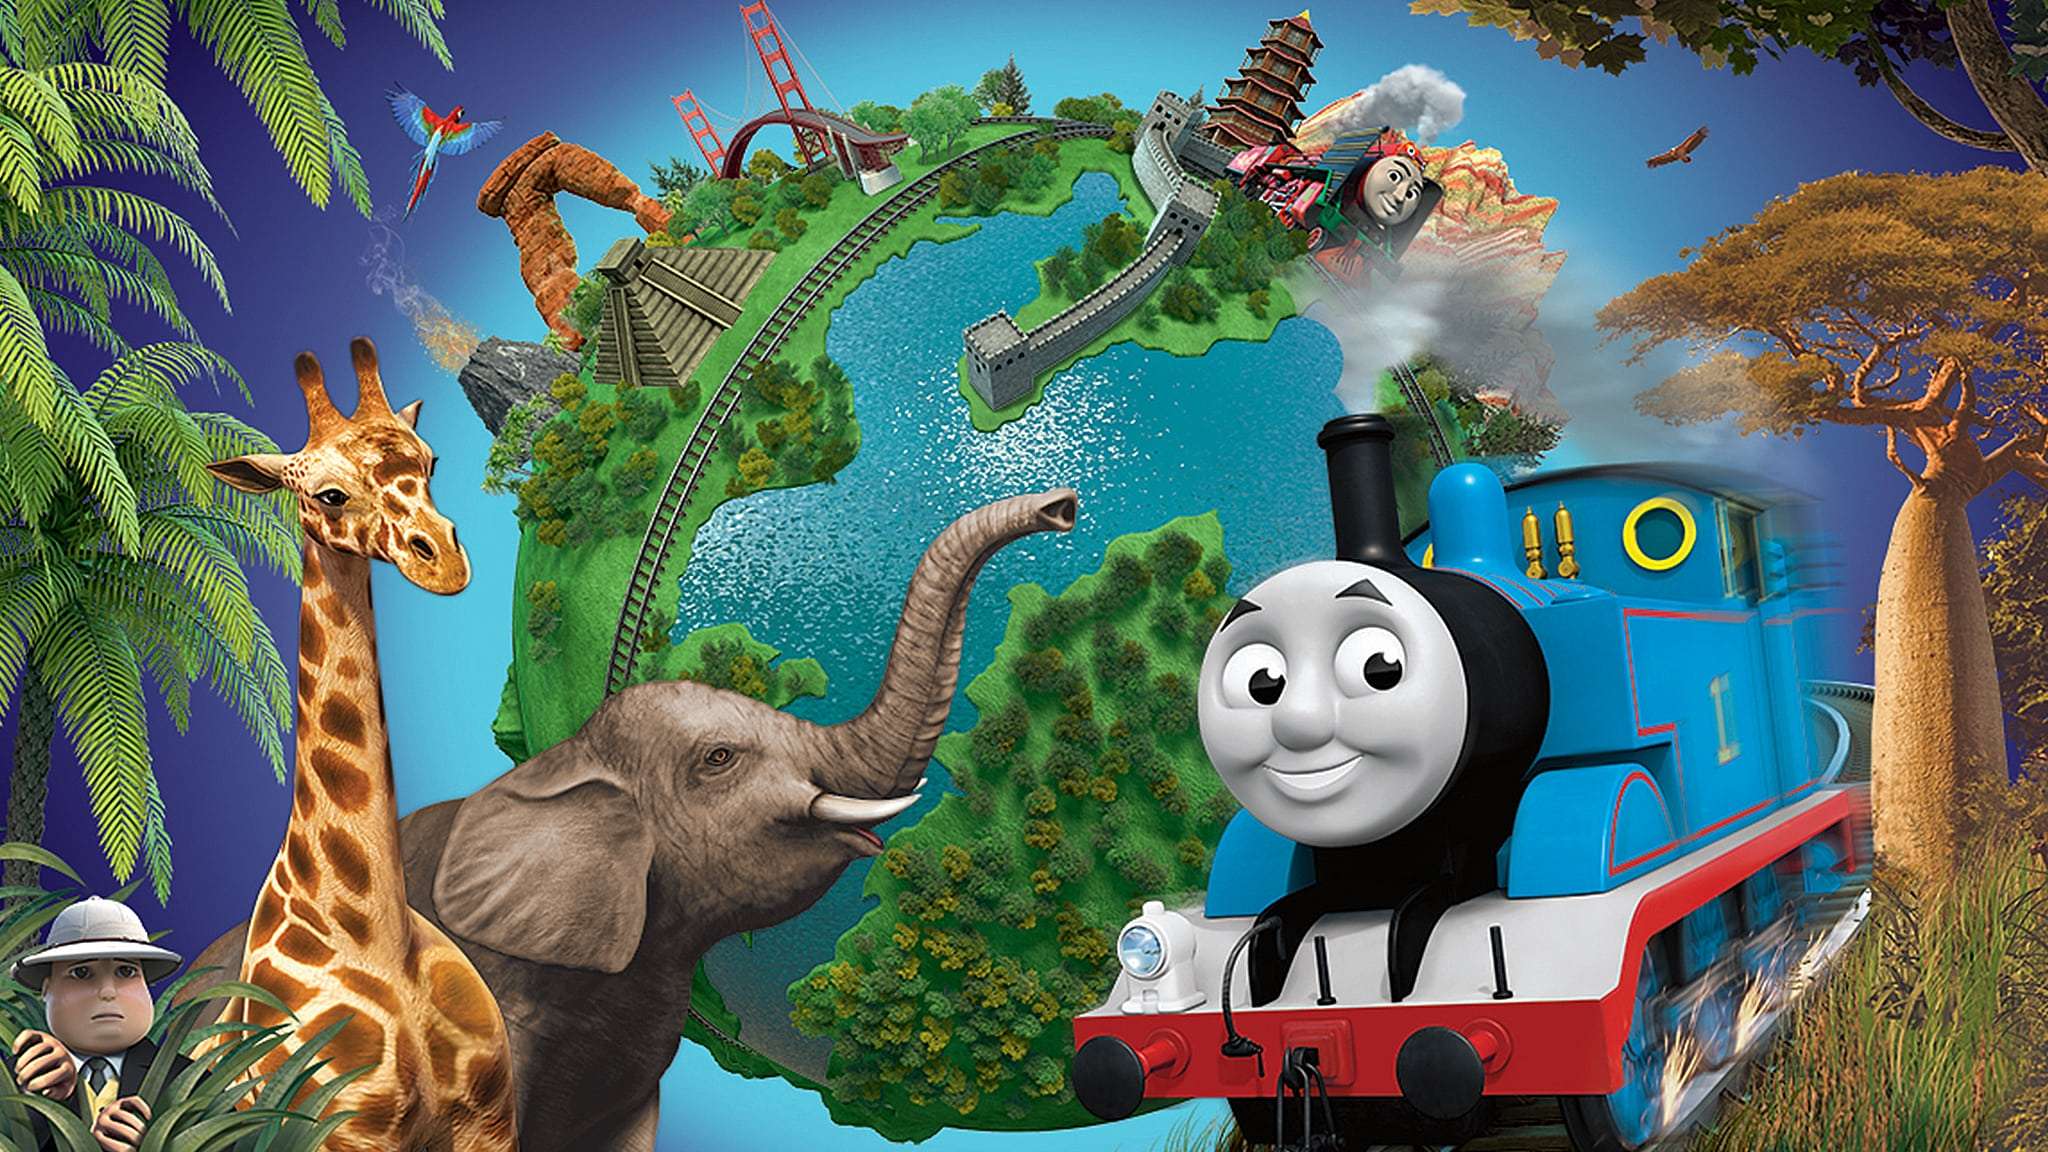 Thomas & Friends: Big World! Big Adventures!